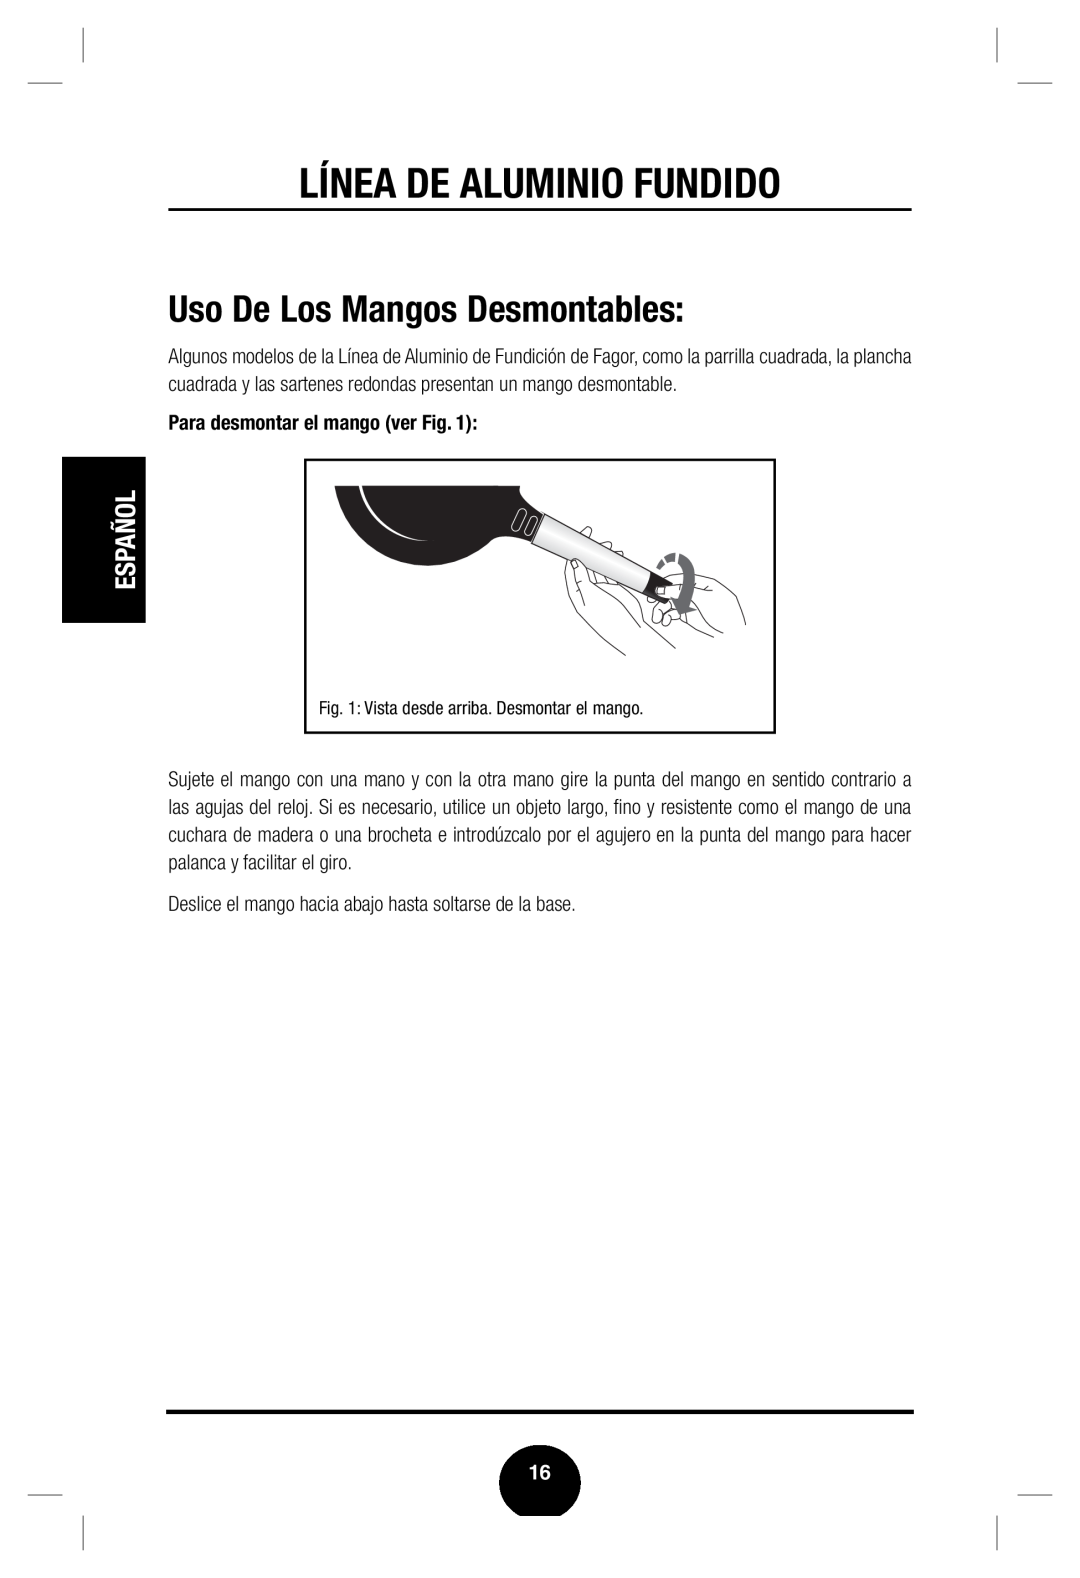 Fagor America Cast Aluminum Cookware user manual Uso De Los Mangos Desmontables, Línea De Aluminio Fundido, Español 